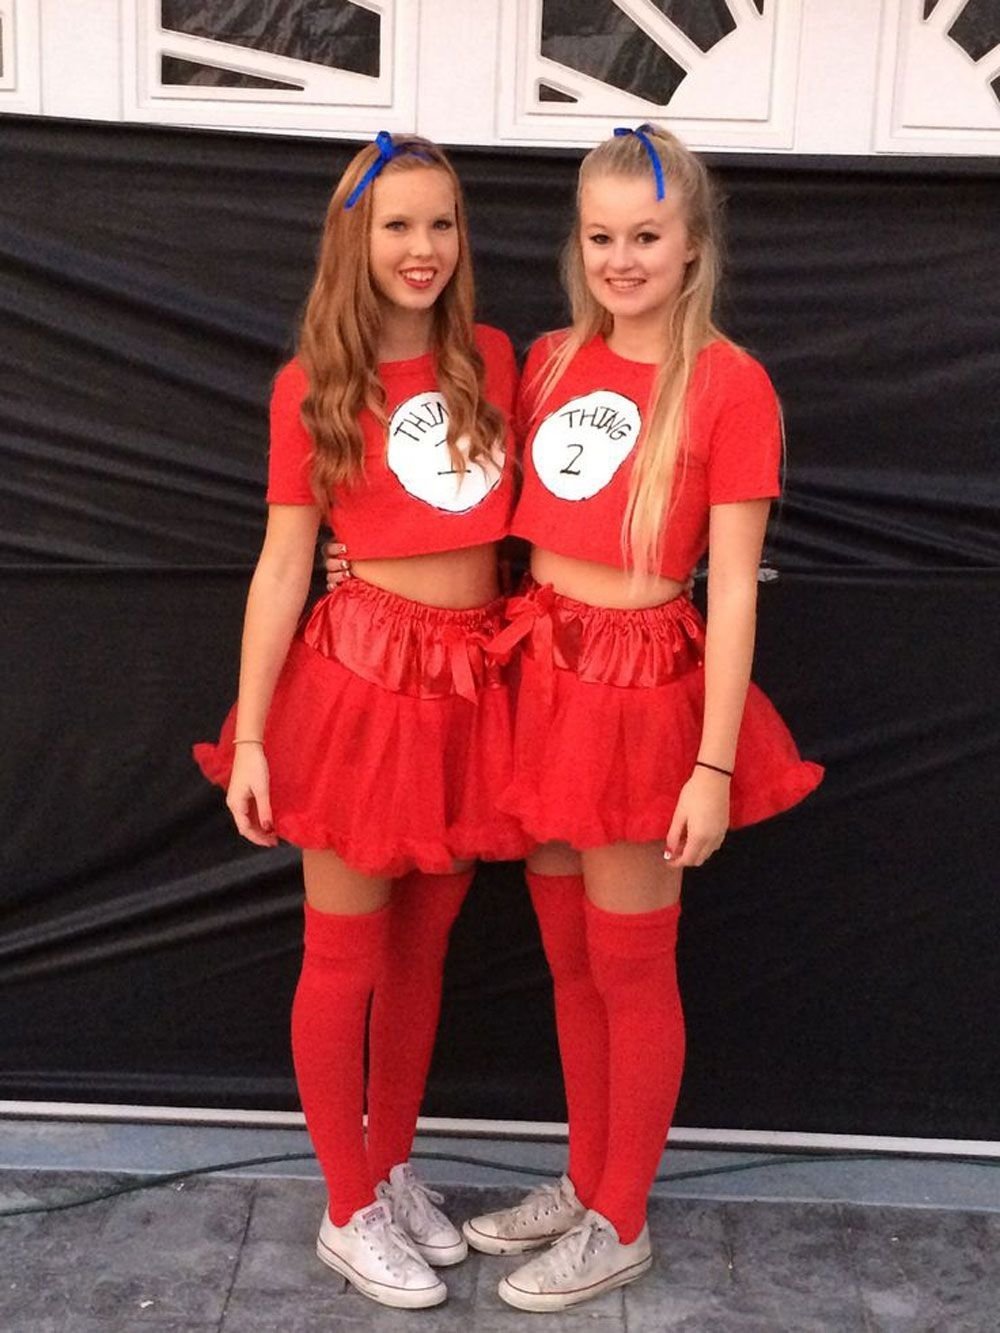 10 Trendy Halloween Costume Ideas For Two Girls 24 genius bff halloween costume ideas you need to try friend 7 2022